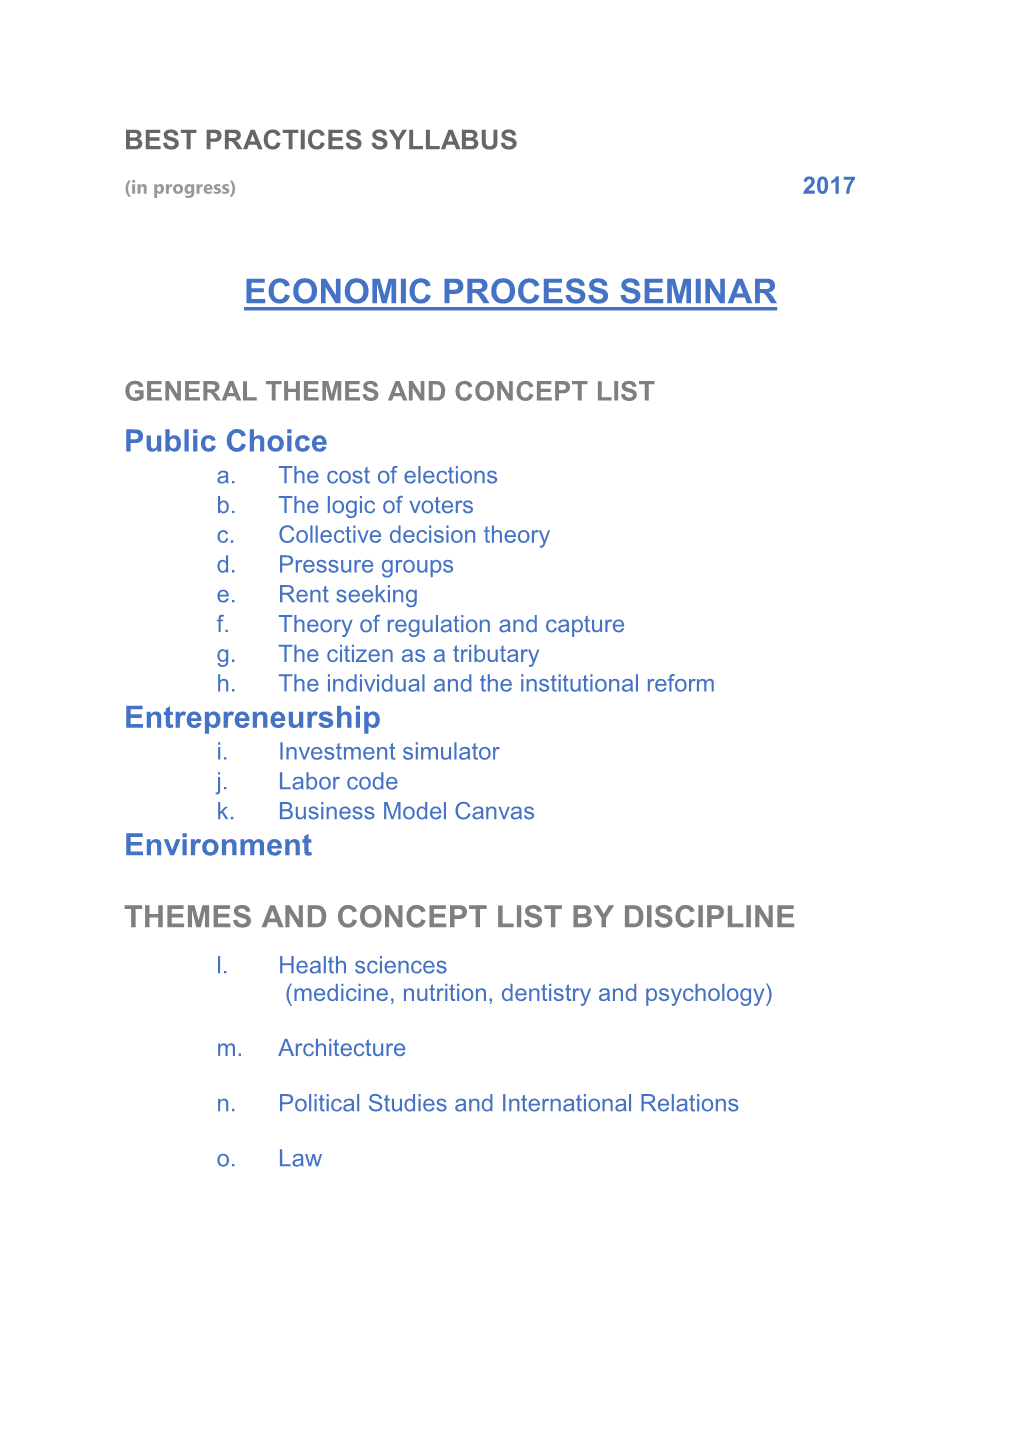 Economic Process Seminar